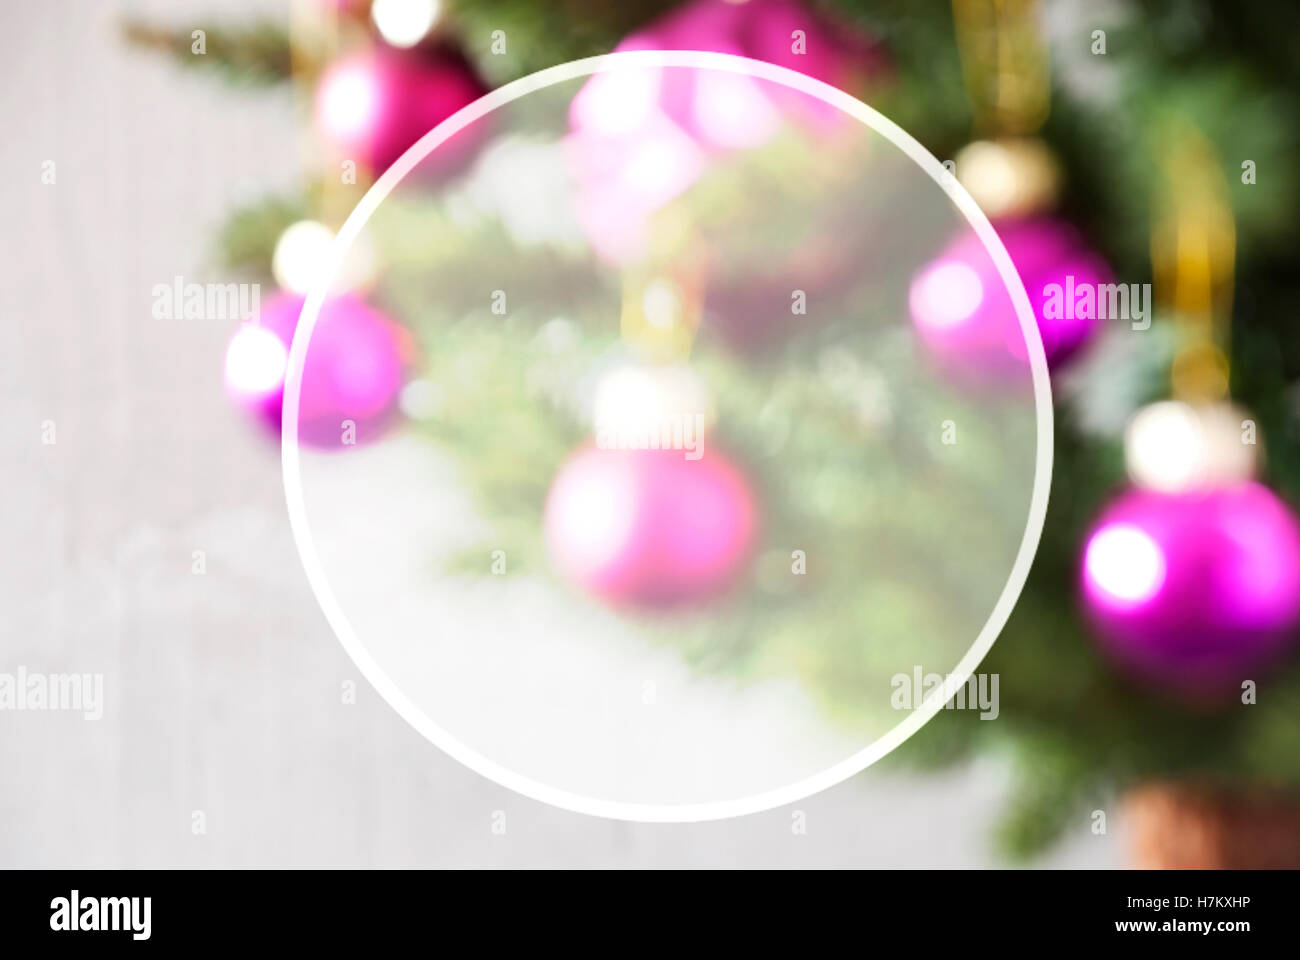 Blurry Balls, Rose Quartz With Copy Space Stock Photo